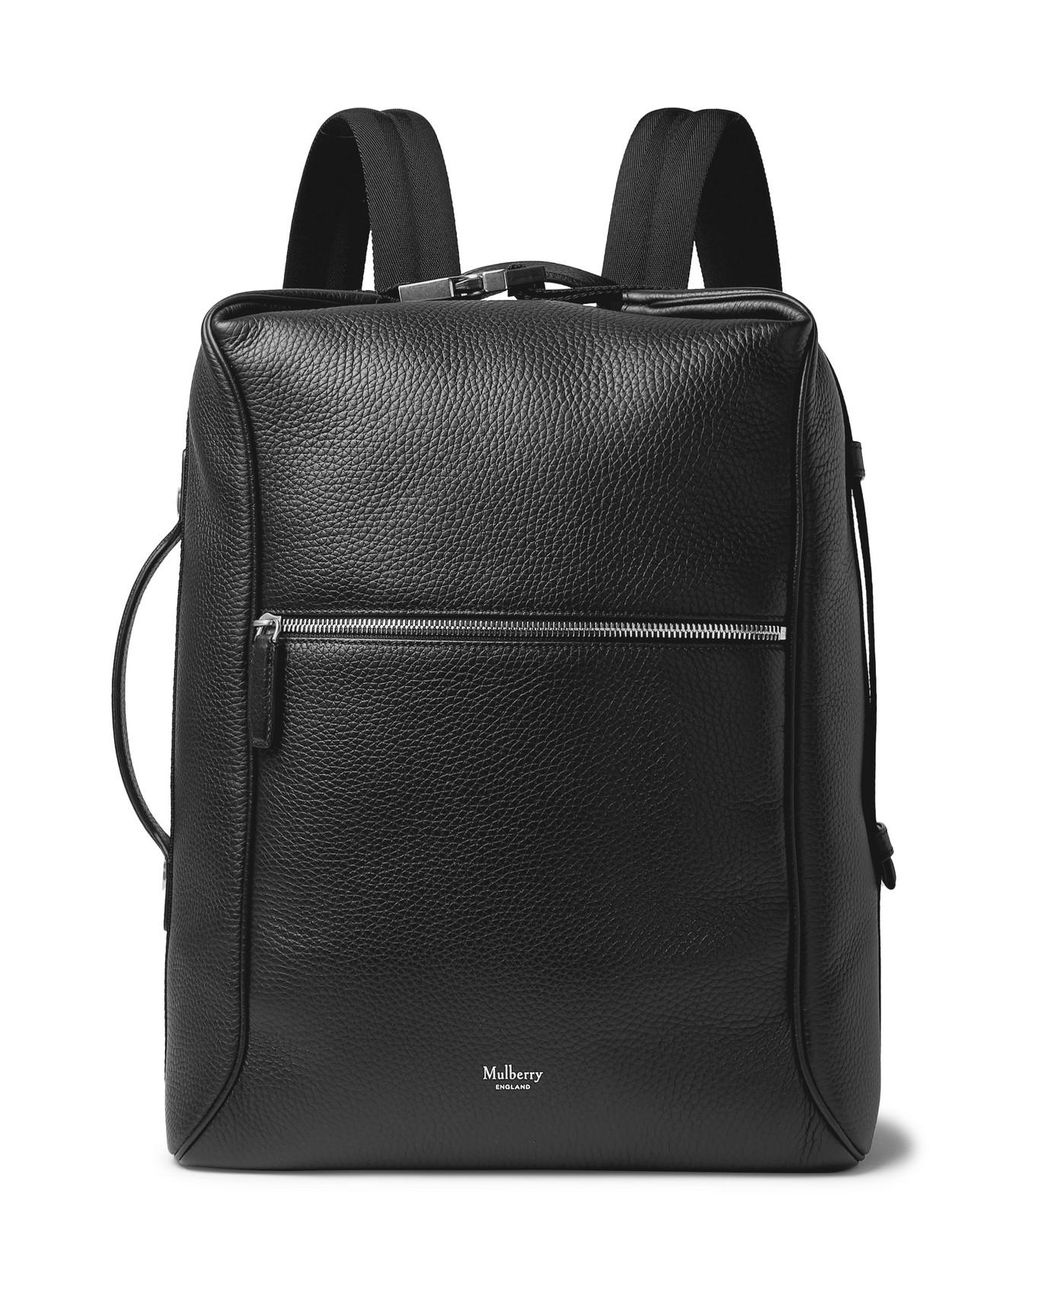 Mulberry Urban Full-grain Leather Backpack in Black for Men - Lyst